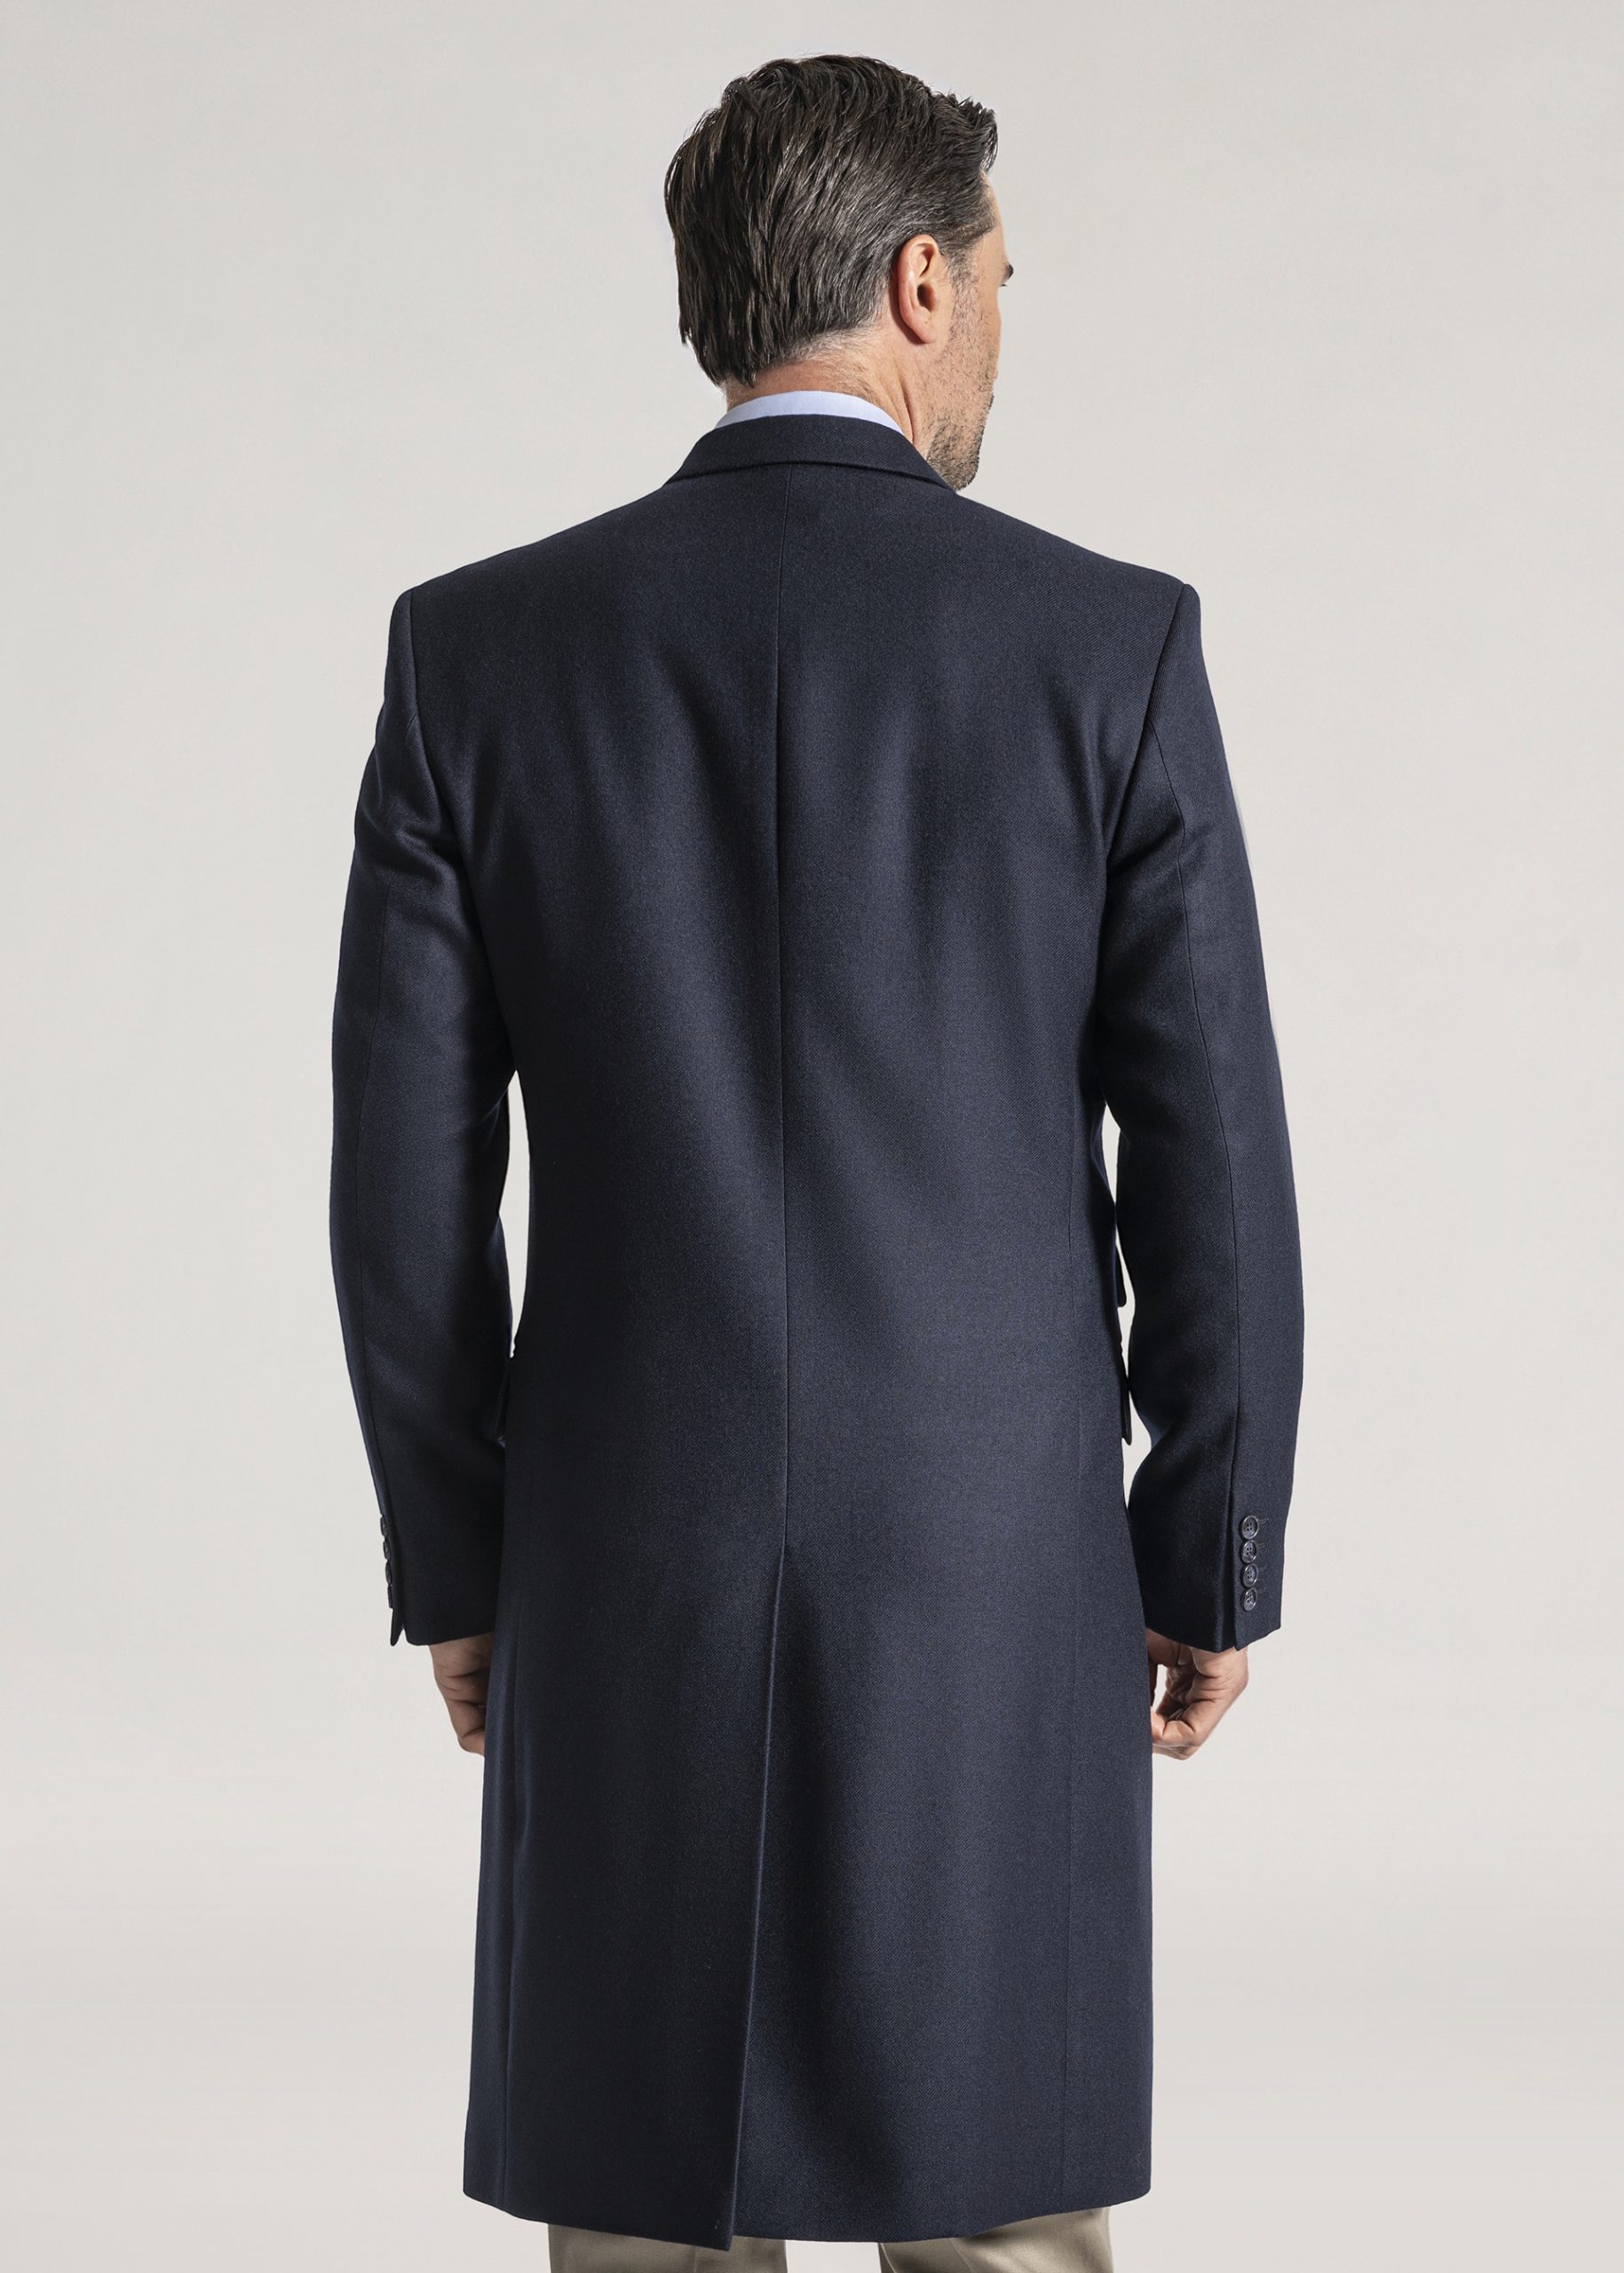 Roderick Charles formal long overcoat in navy blue